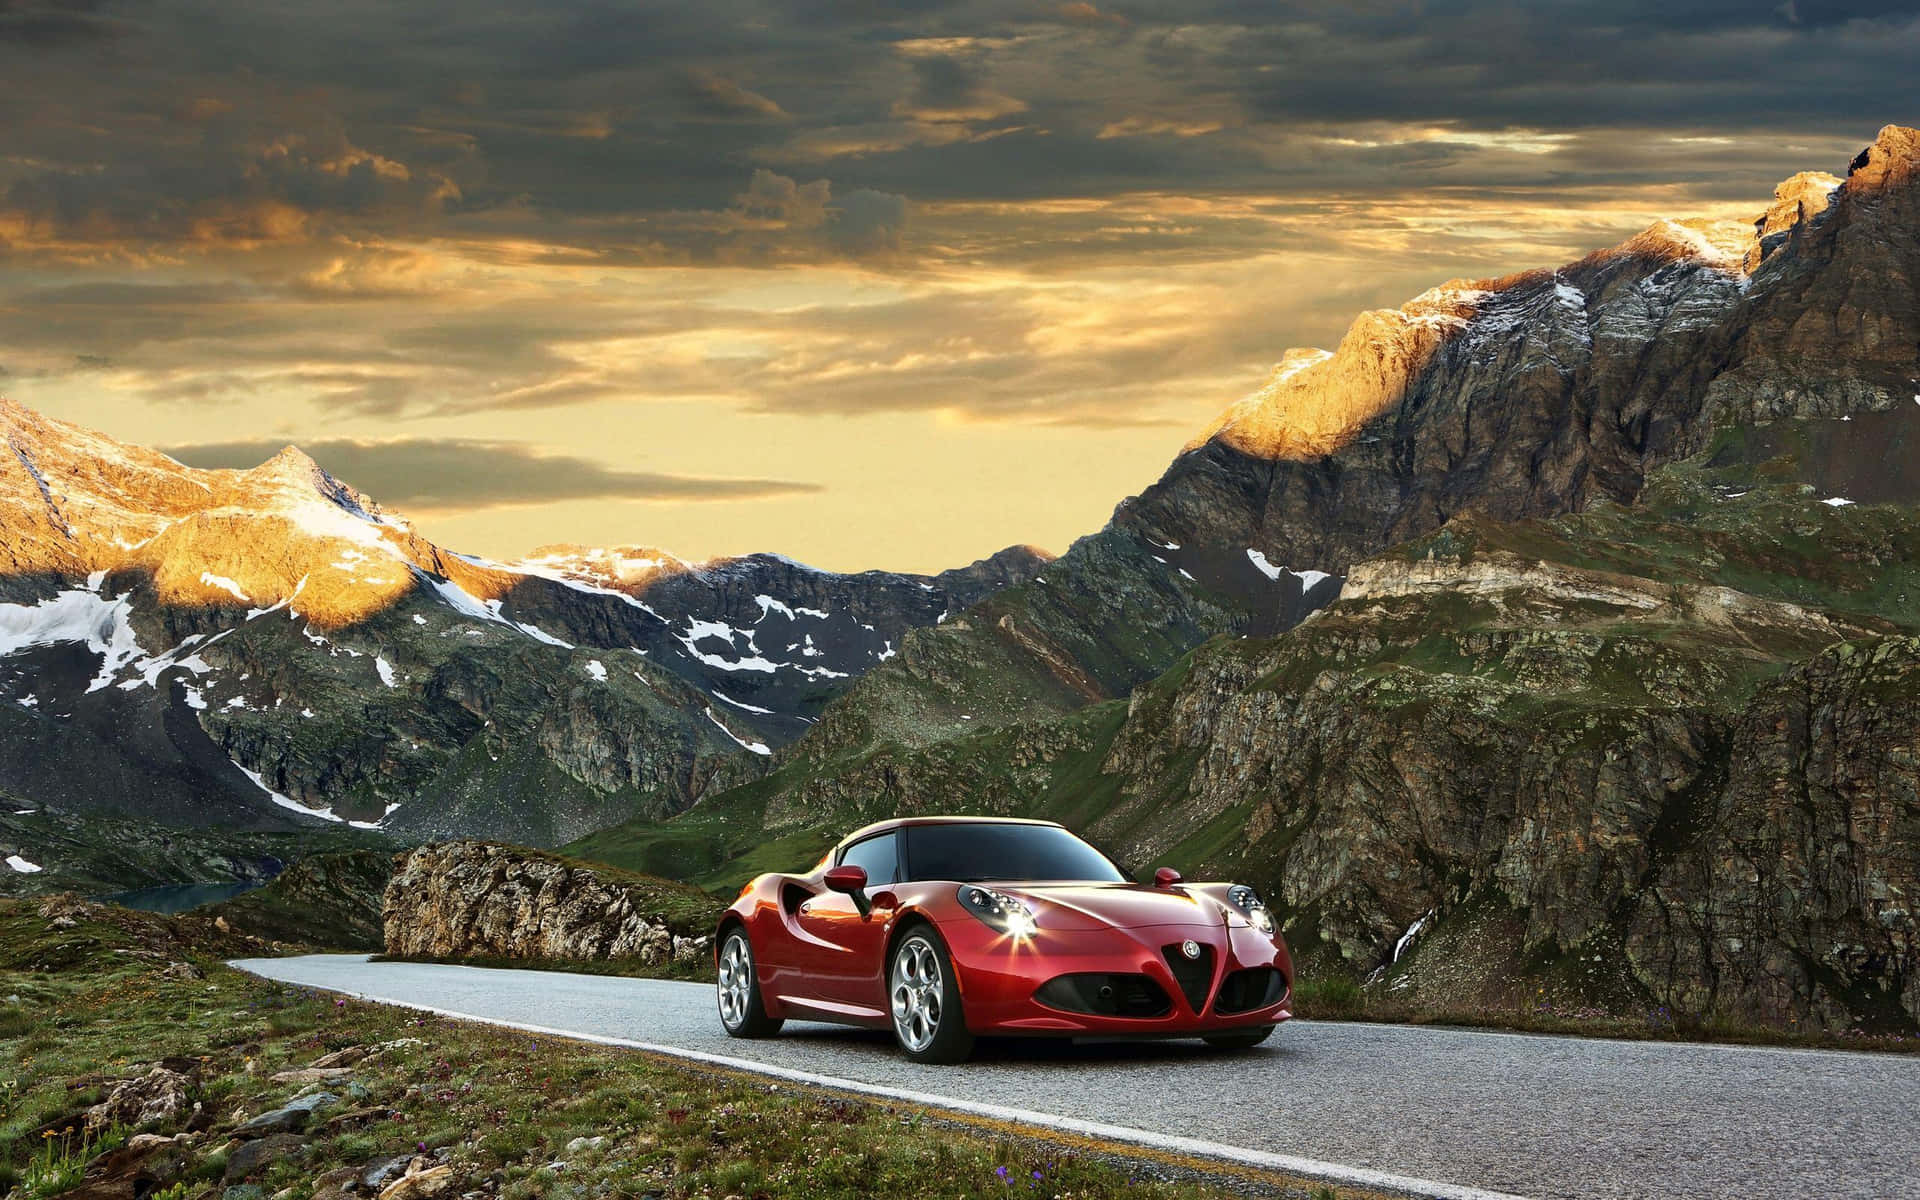 Powerful Alfa Romeo 4c On The Road Background